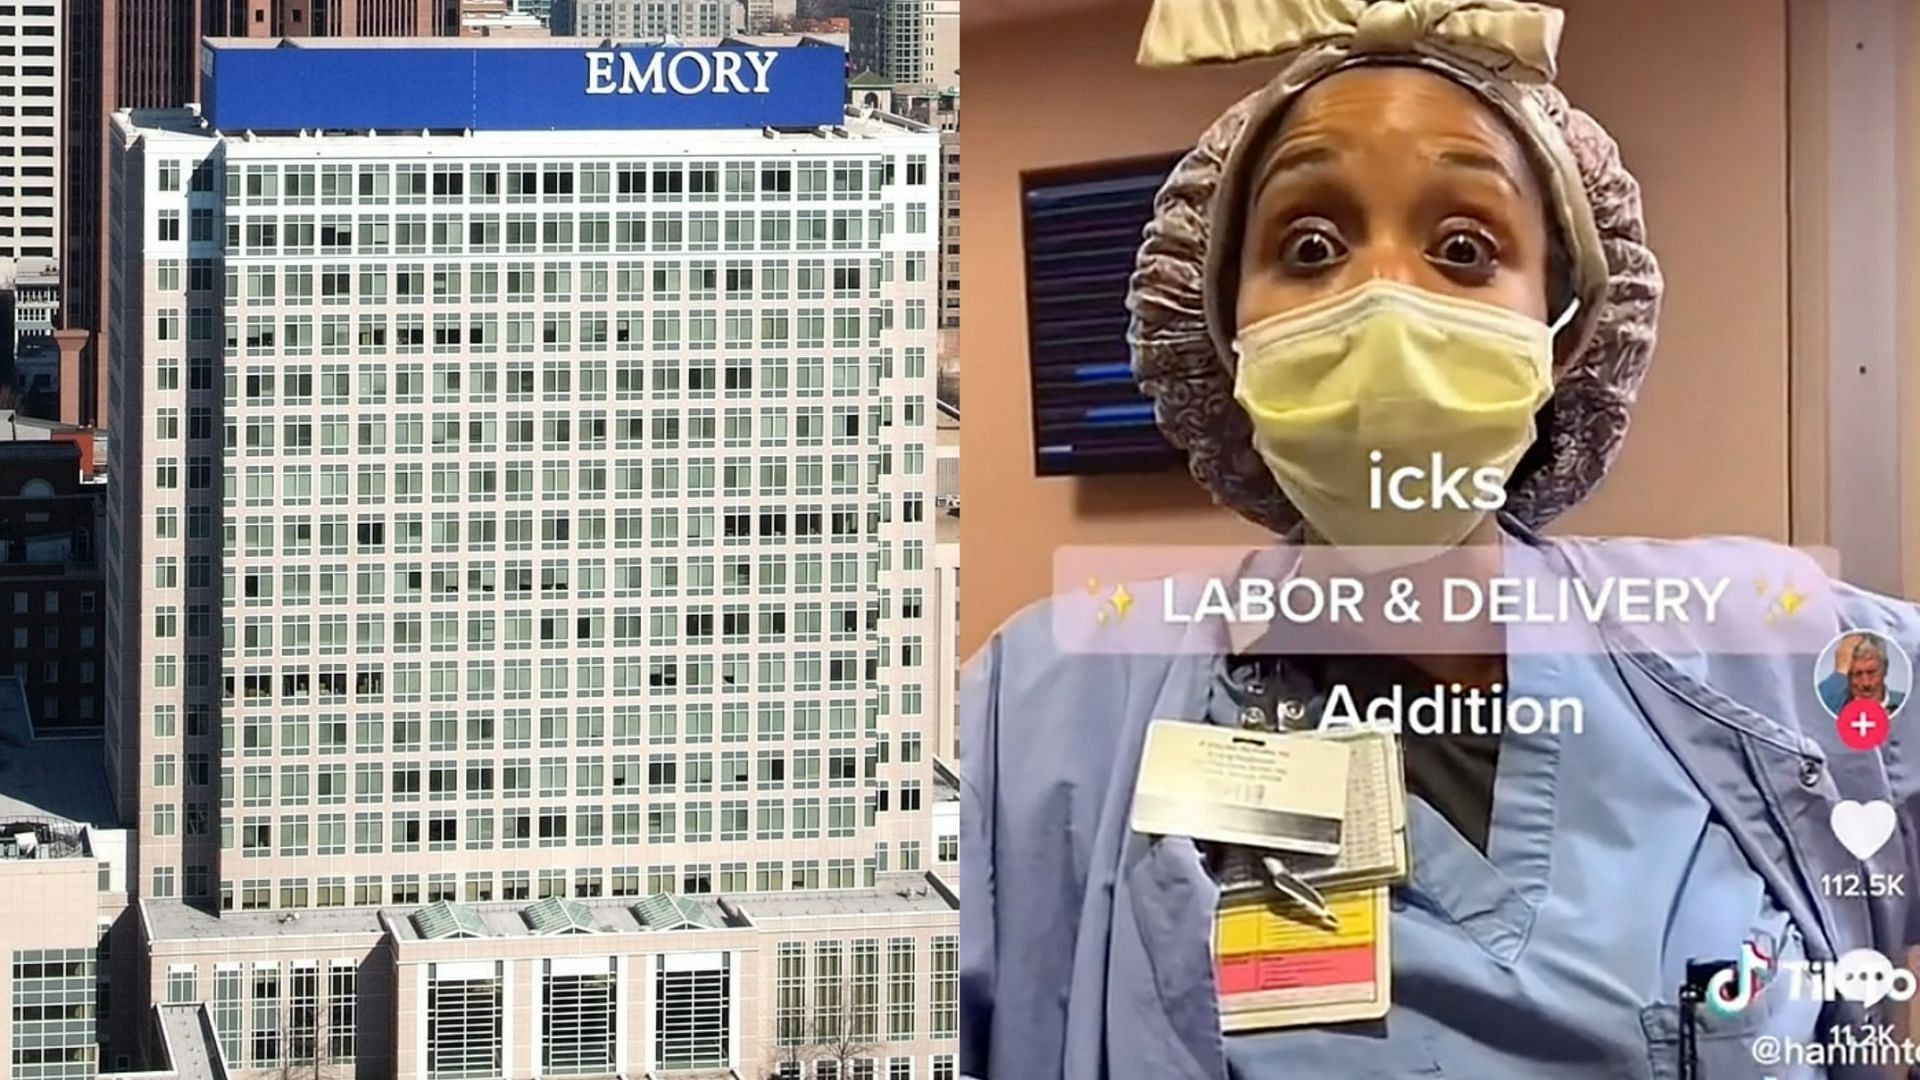 Atlanta nurses come under fire for TikTok &quot;icks&quot; video (Image via Emory University and TikTok)